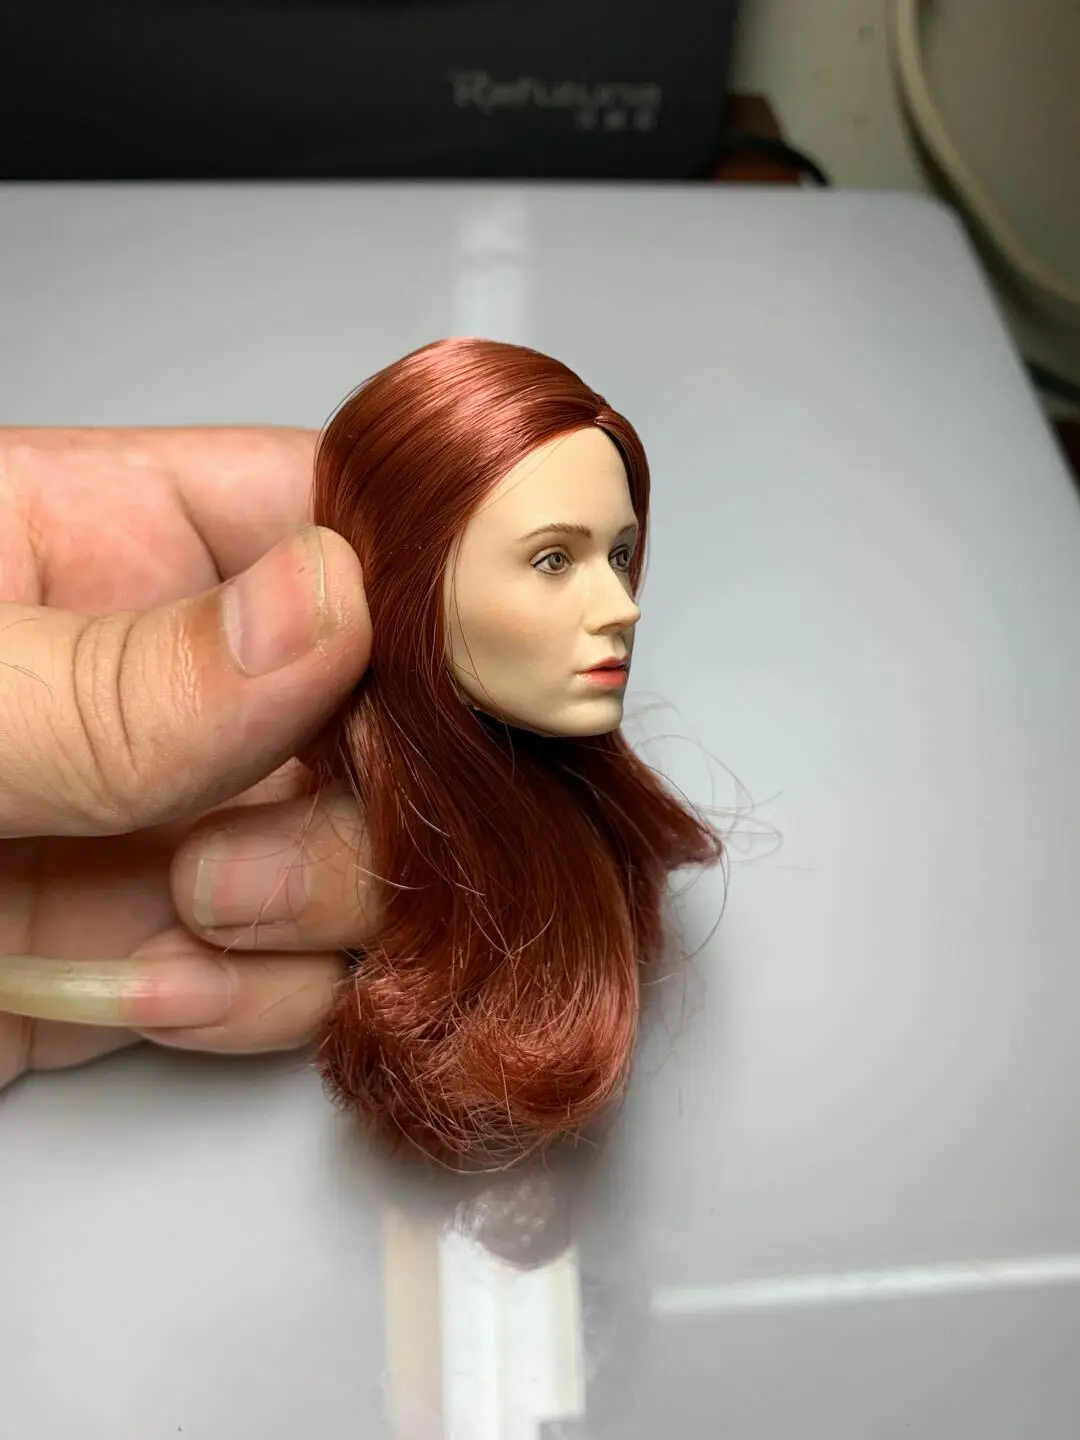 Details about   1/6 Beauty Soldier Jedi Agent Teresa Female Officer Figures Red Hair Head Sculpt 